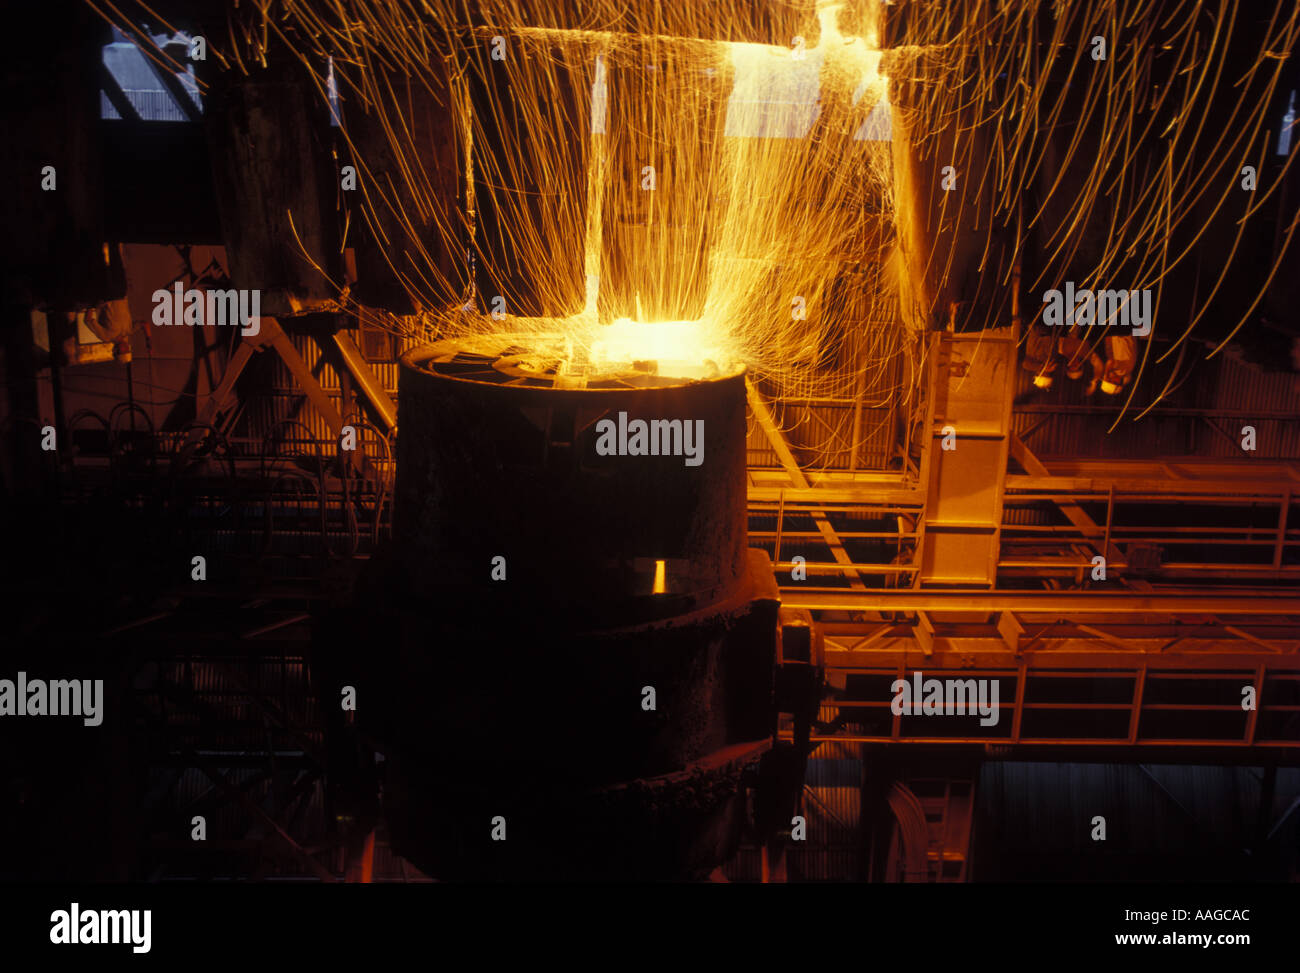 TATA impianto siderurgico Jamshedpur Bihar India Foto Stock